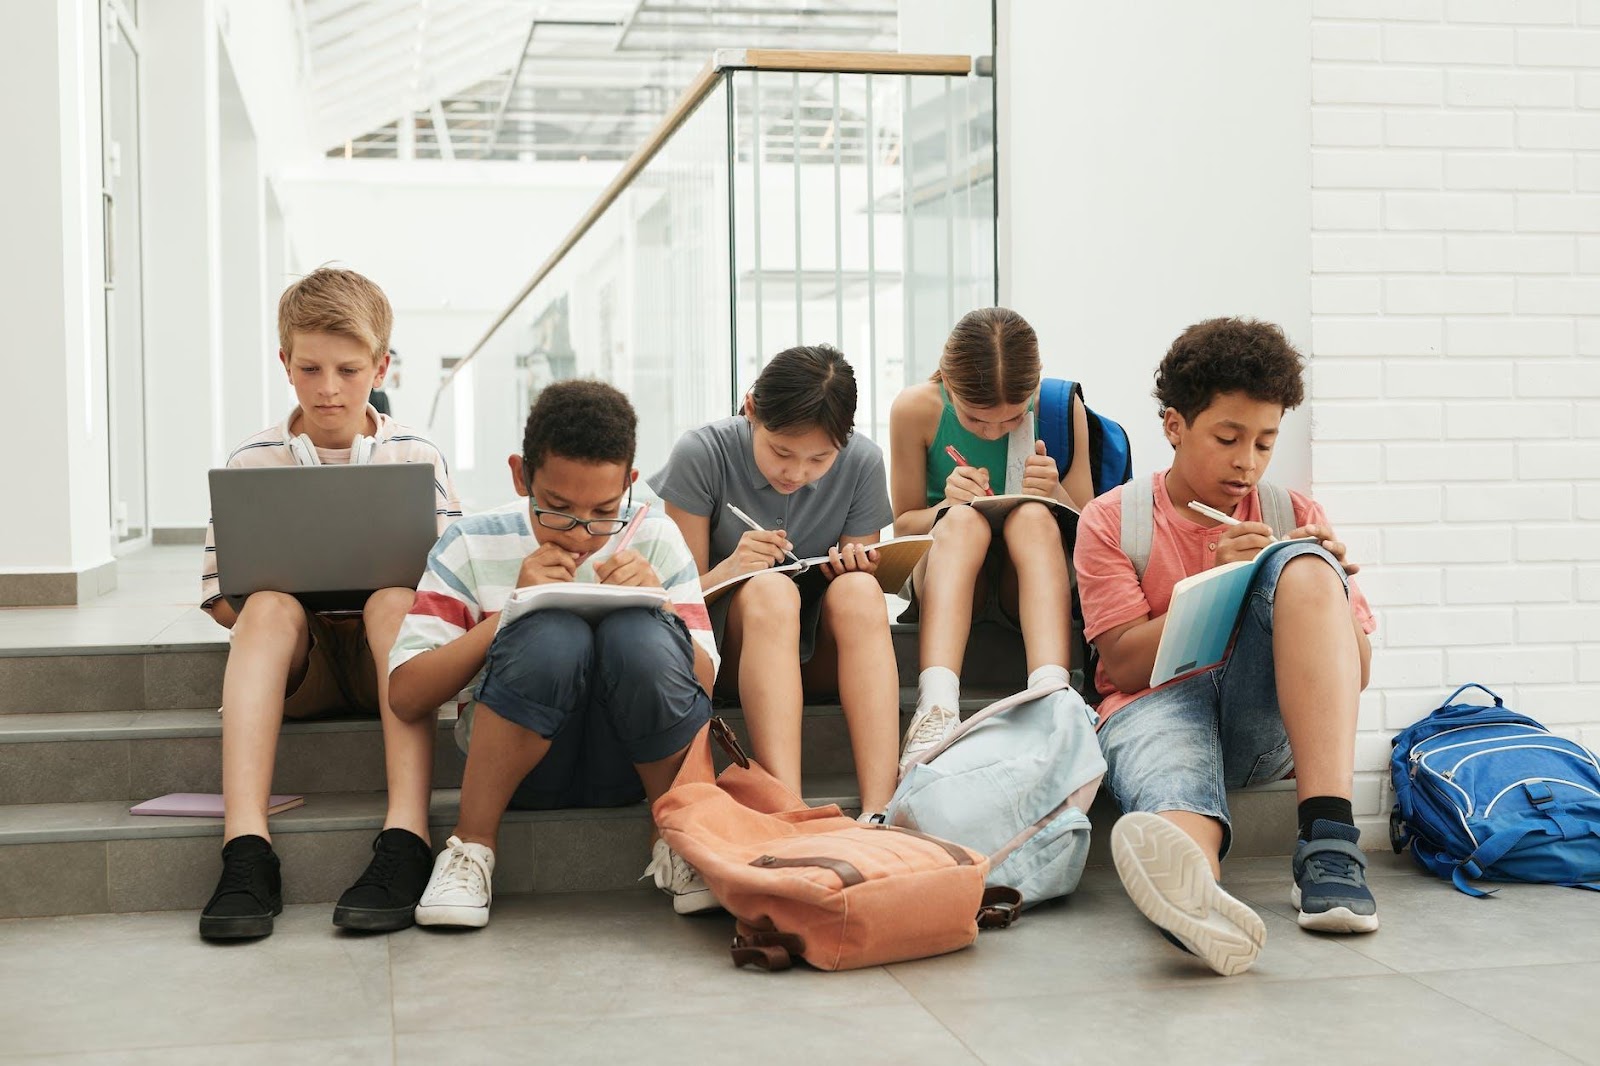 3 Boys and 2 Girls Sitting on Floor Using Macbook